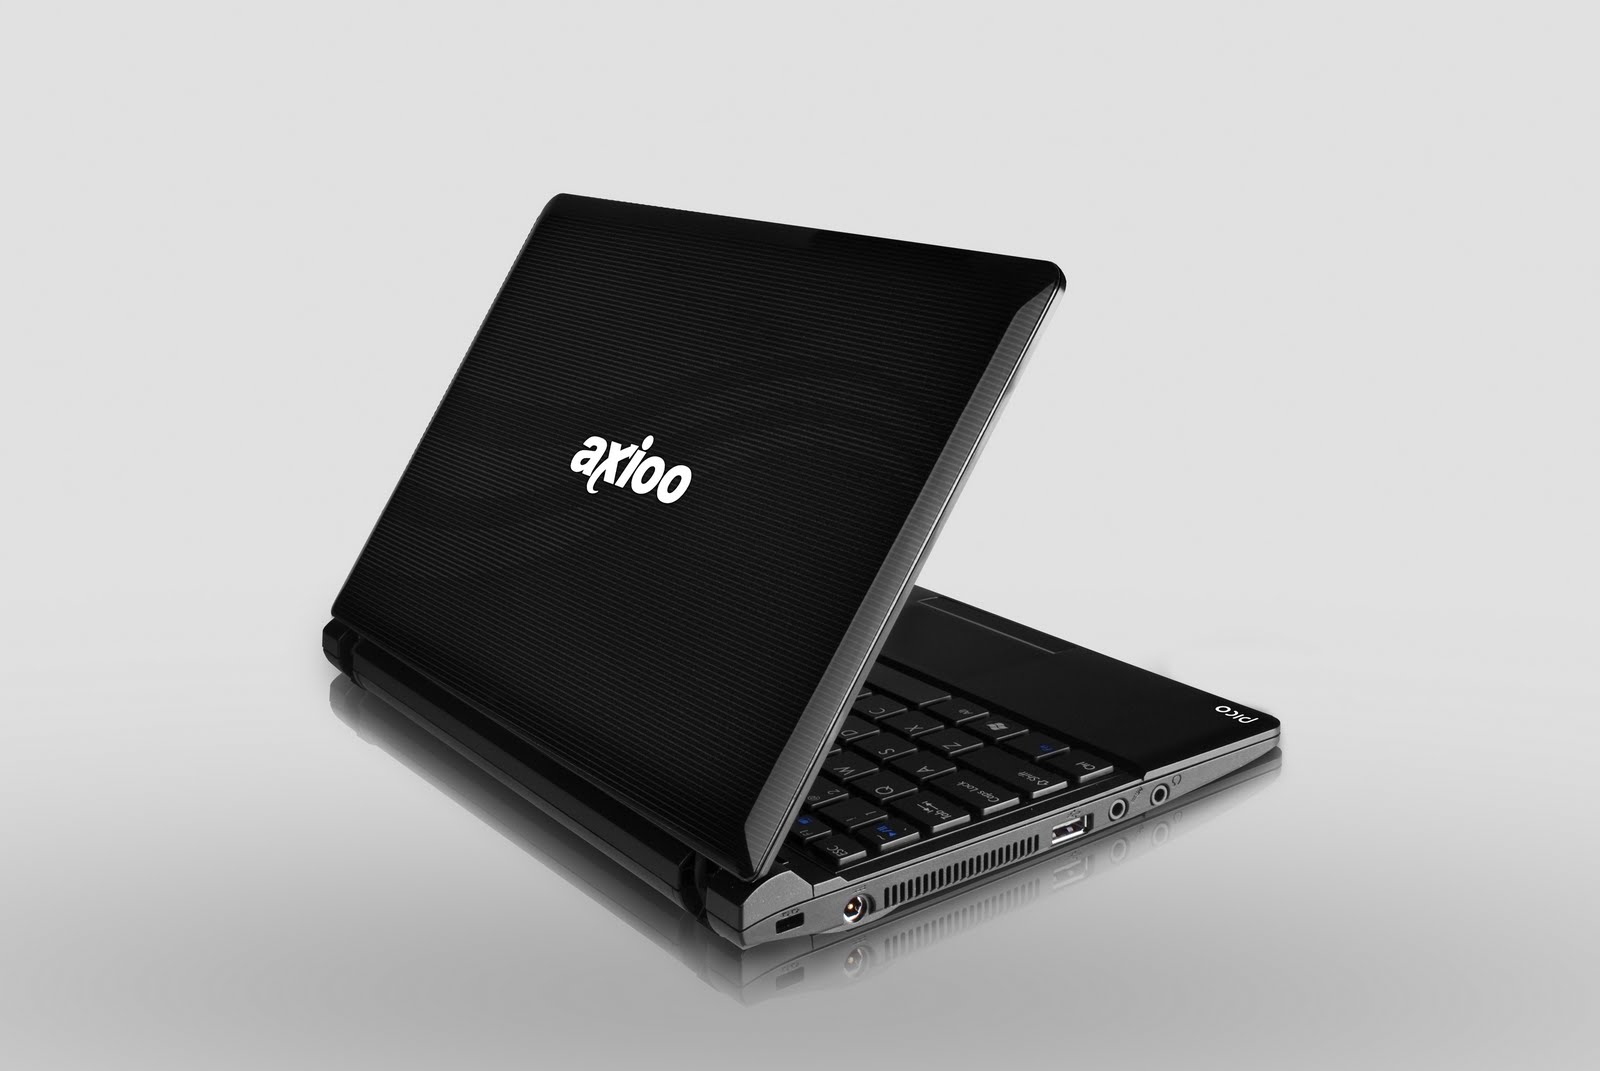 Axioo Pico M1100 Drivers For Mac